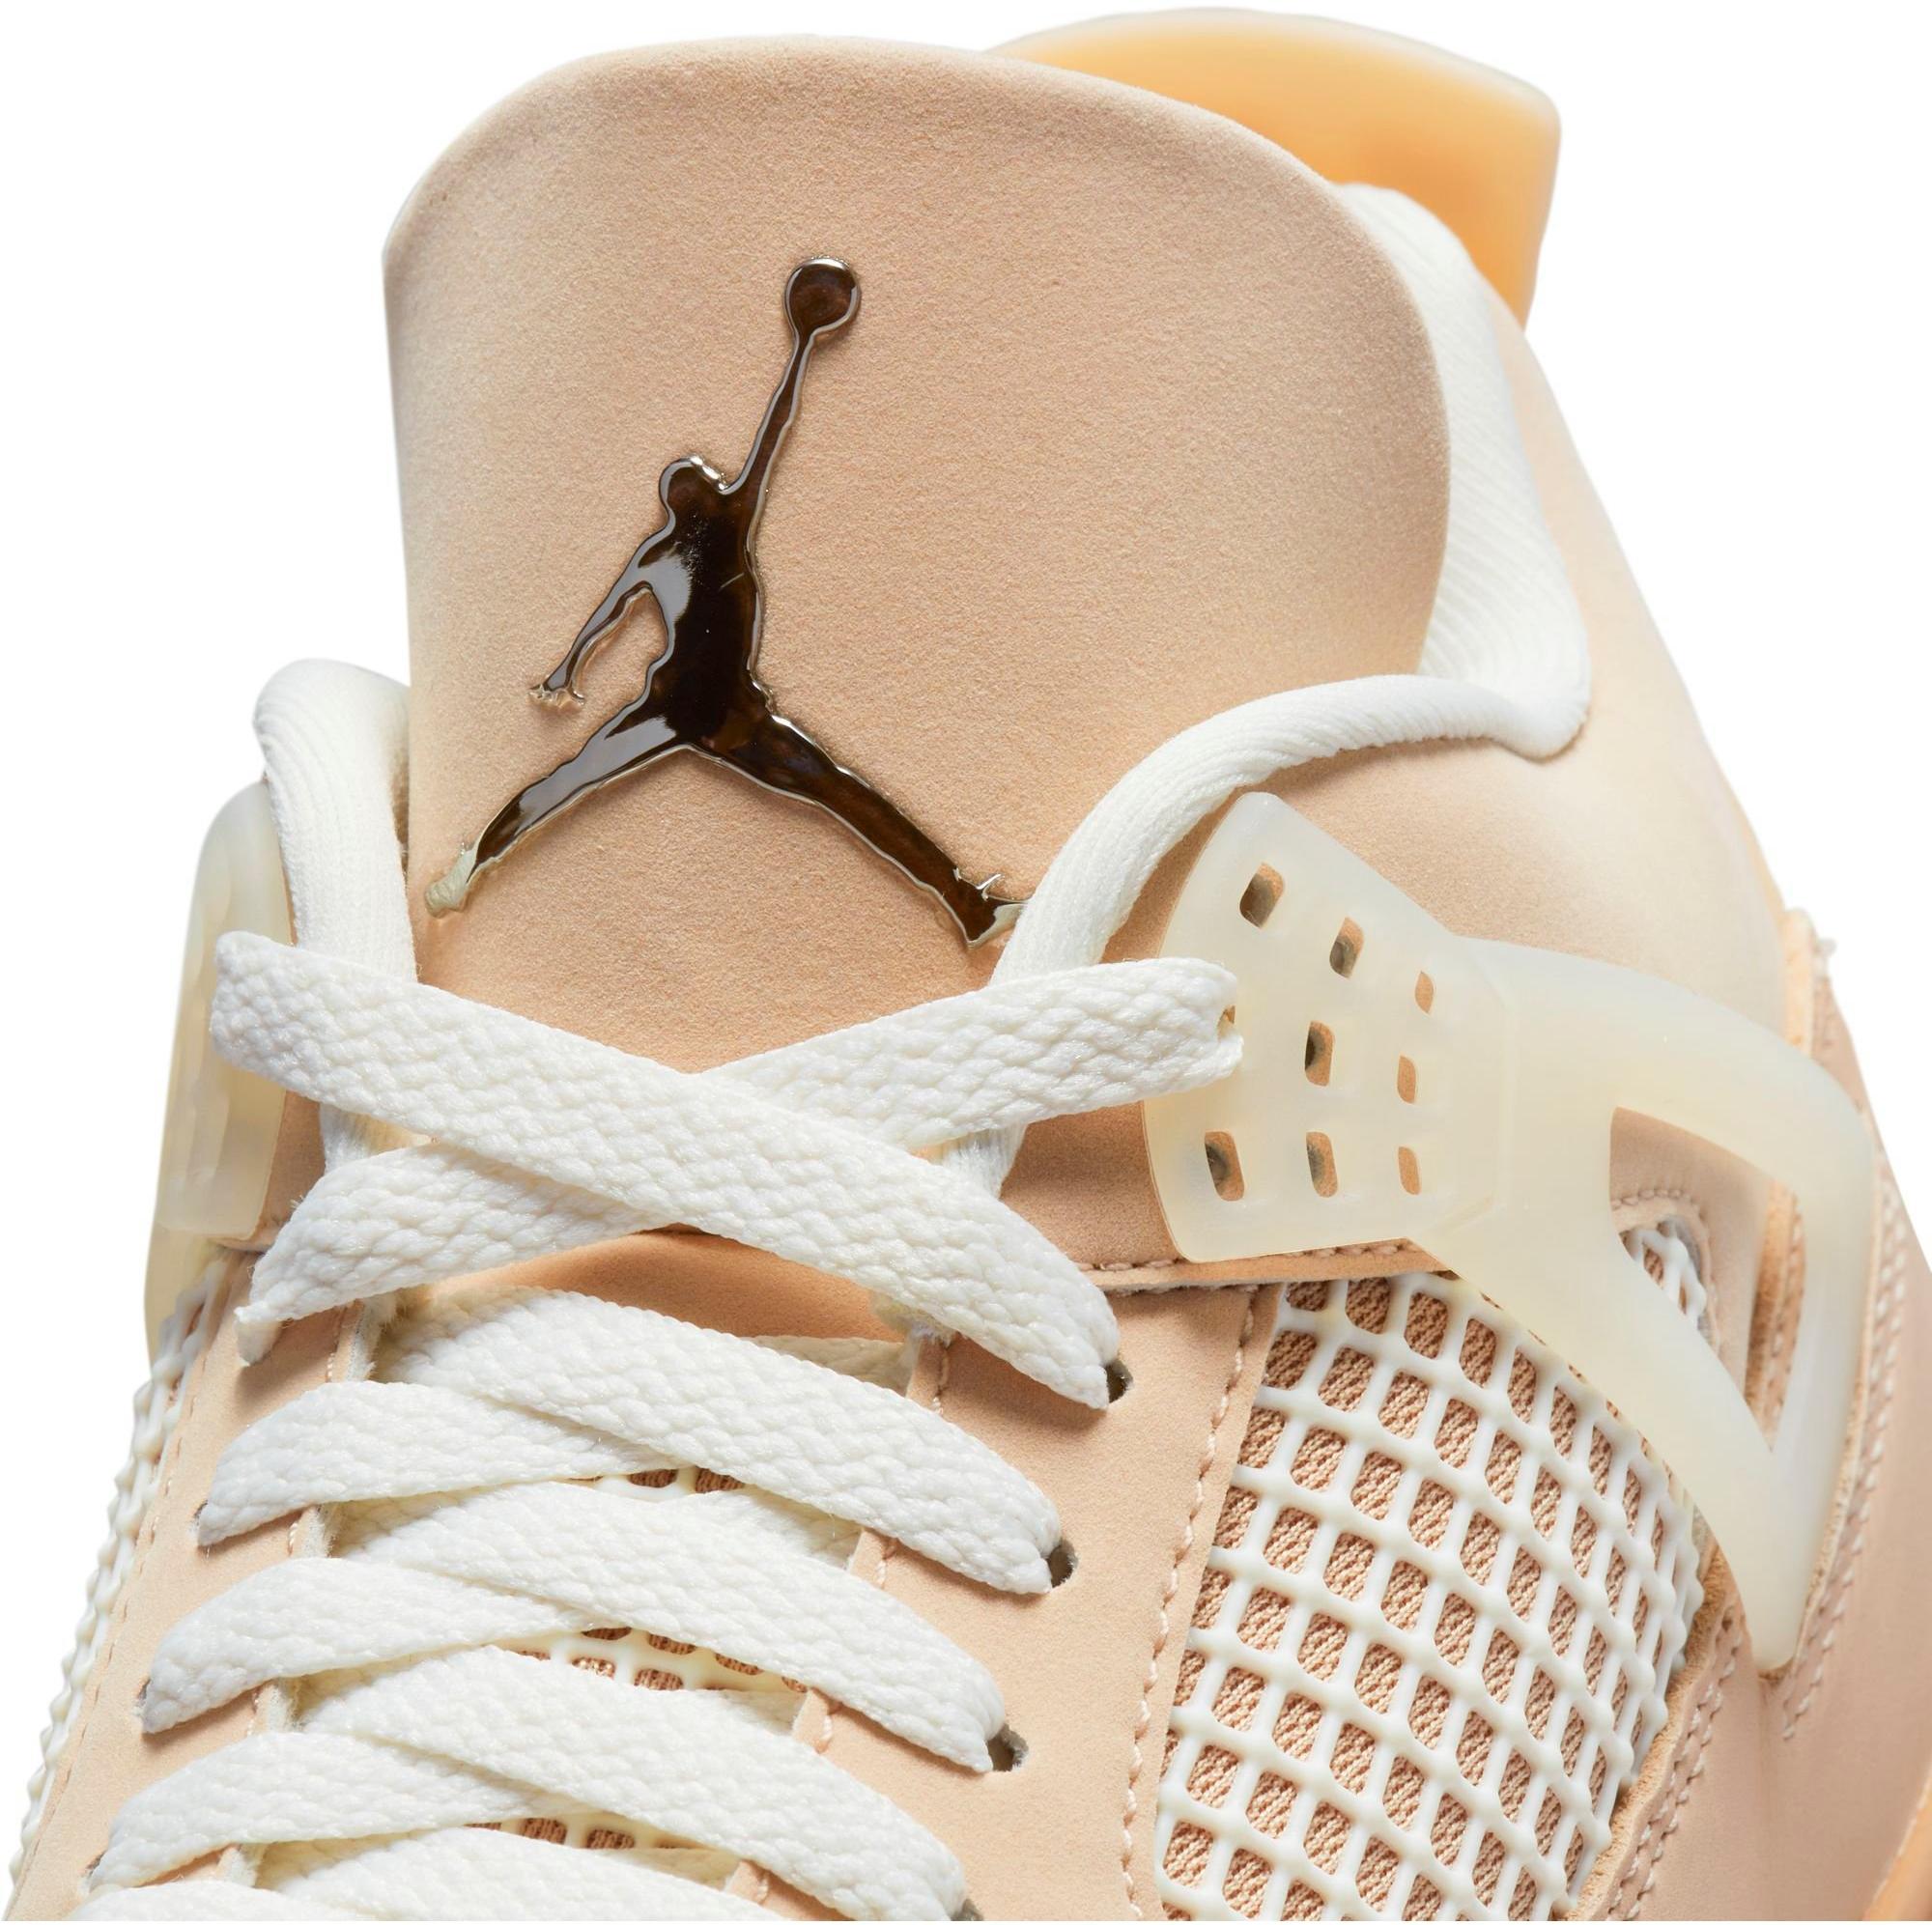 Sneakers Release – Jordan 4 Retro “Shimmer” Women’s Colorway Launching 9/3